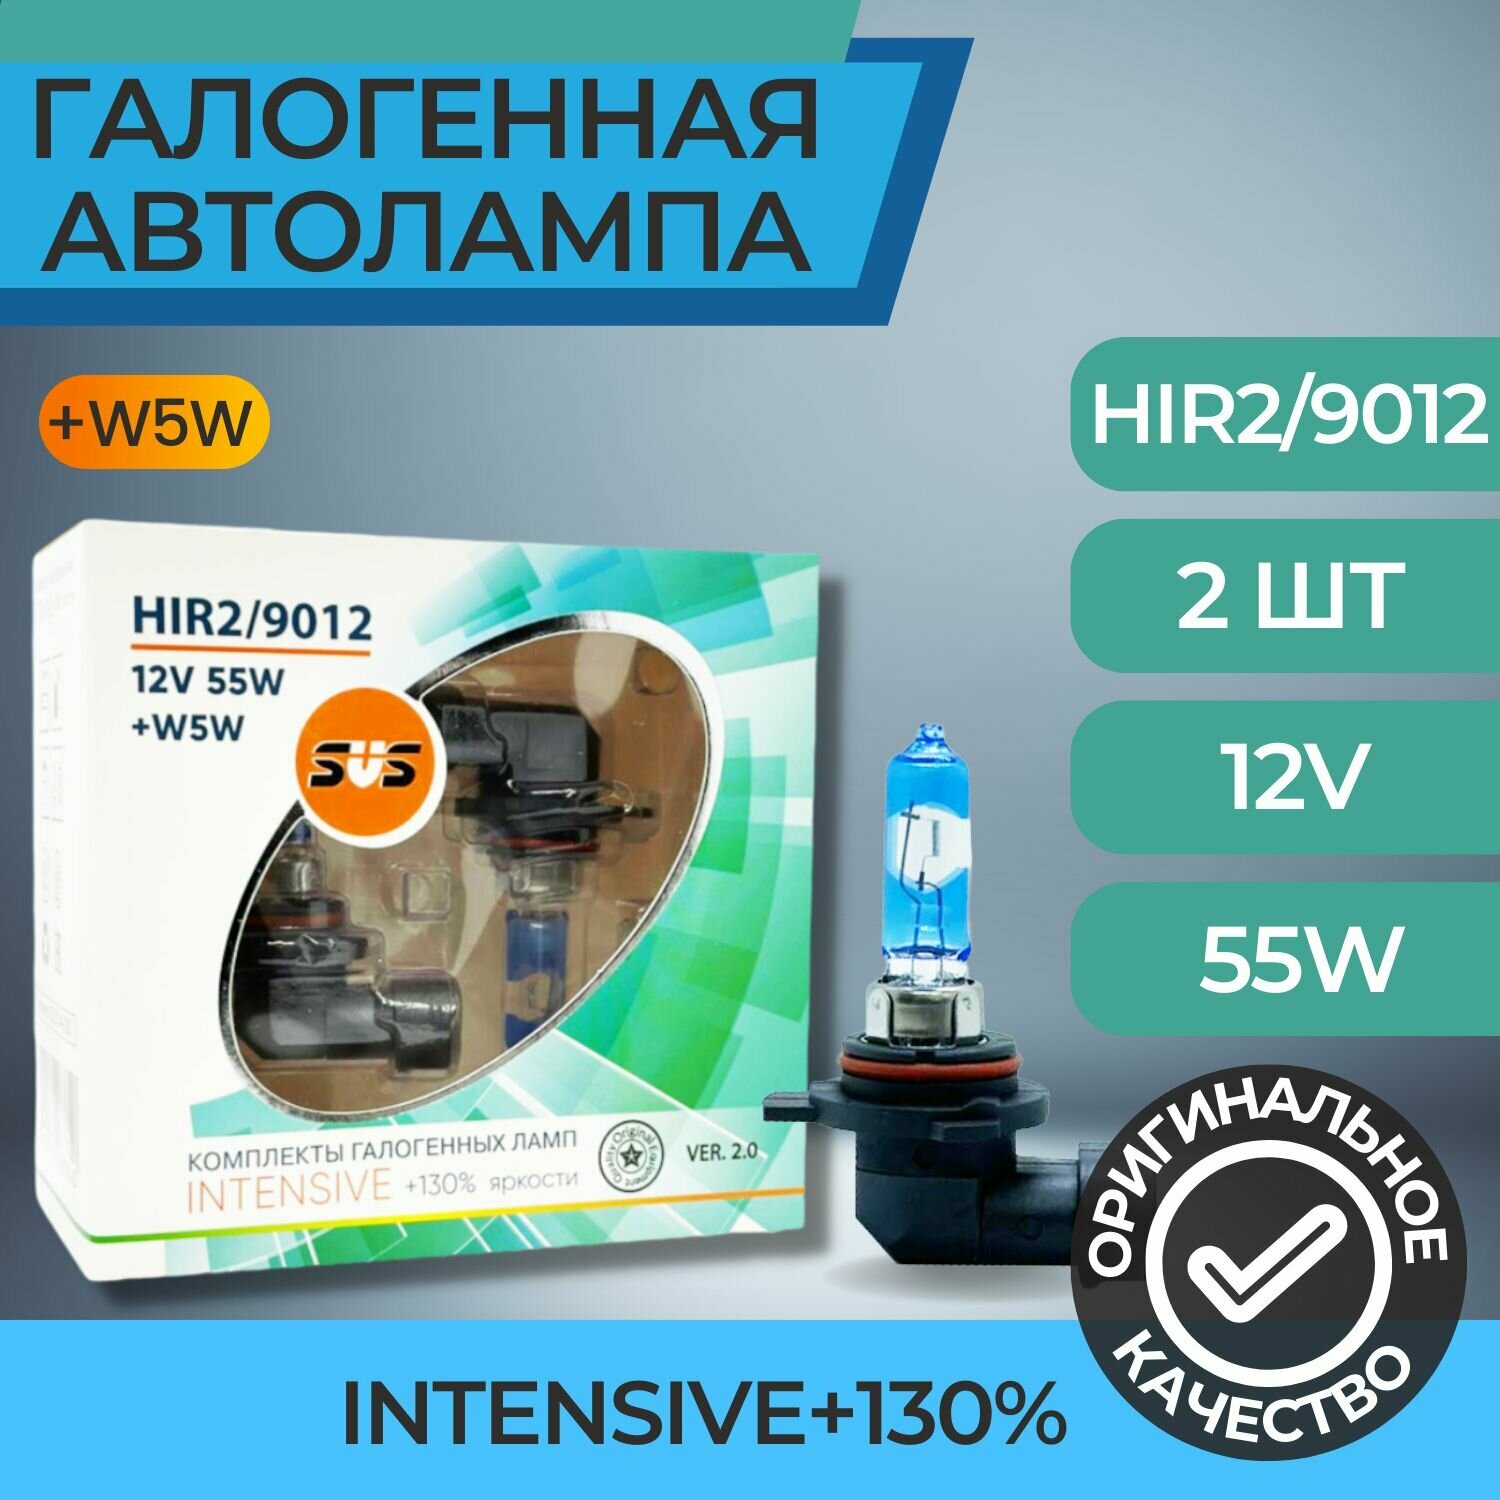 Галогенные лампы серия Intensive+130% 12V HIR2/9012 55W+W5W, комплект 2шт. Ver.2.0